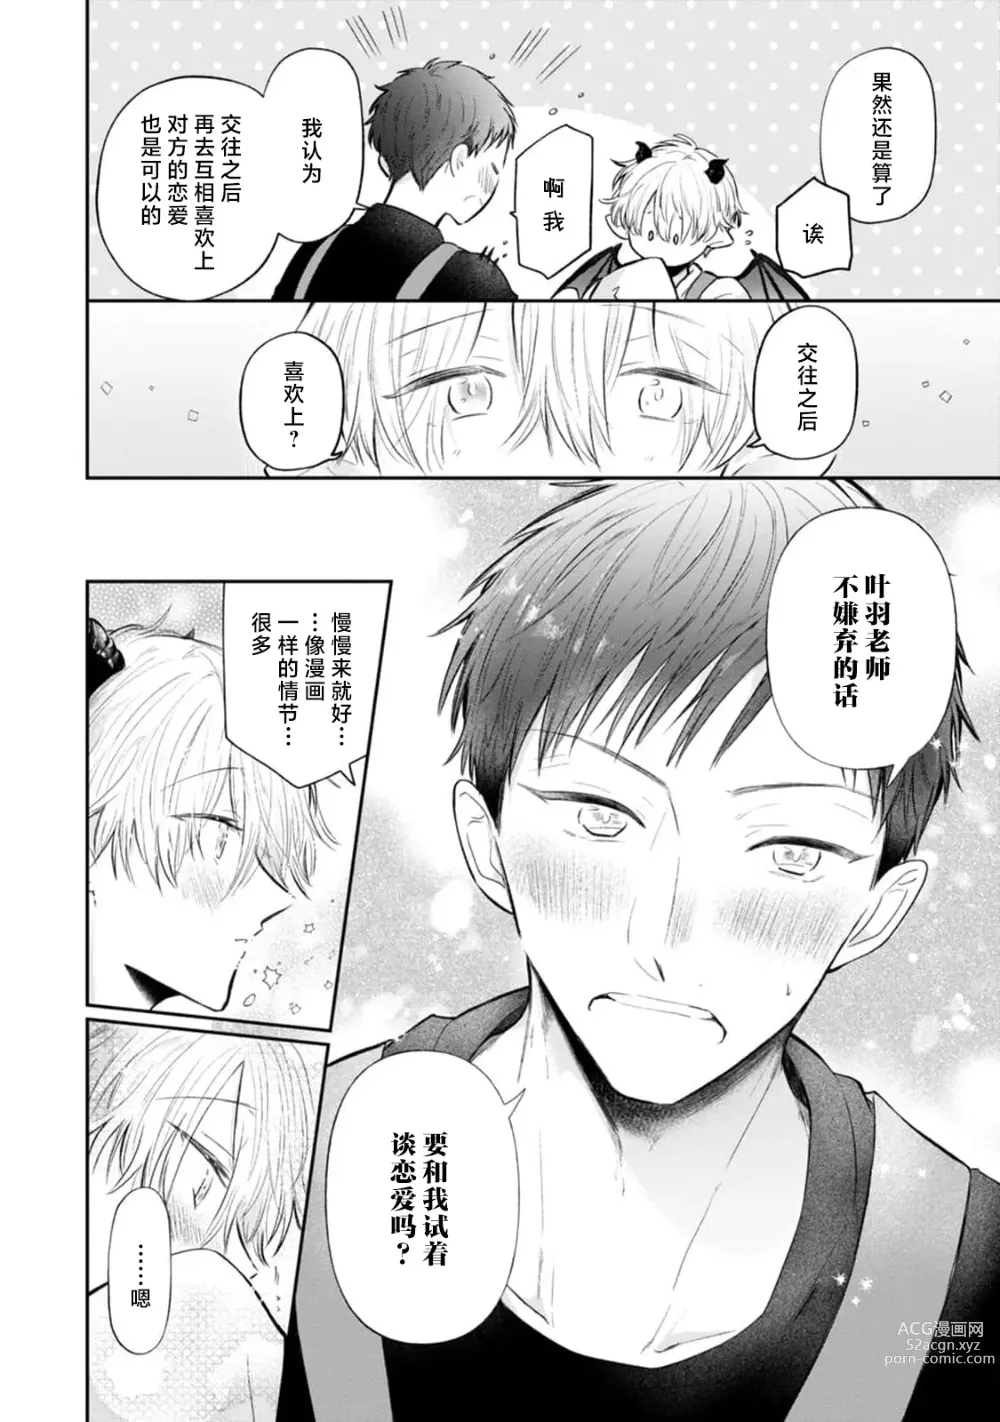 Page 24 of manga 叶羽老师全部是第一次 1-6 end